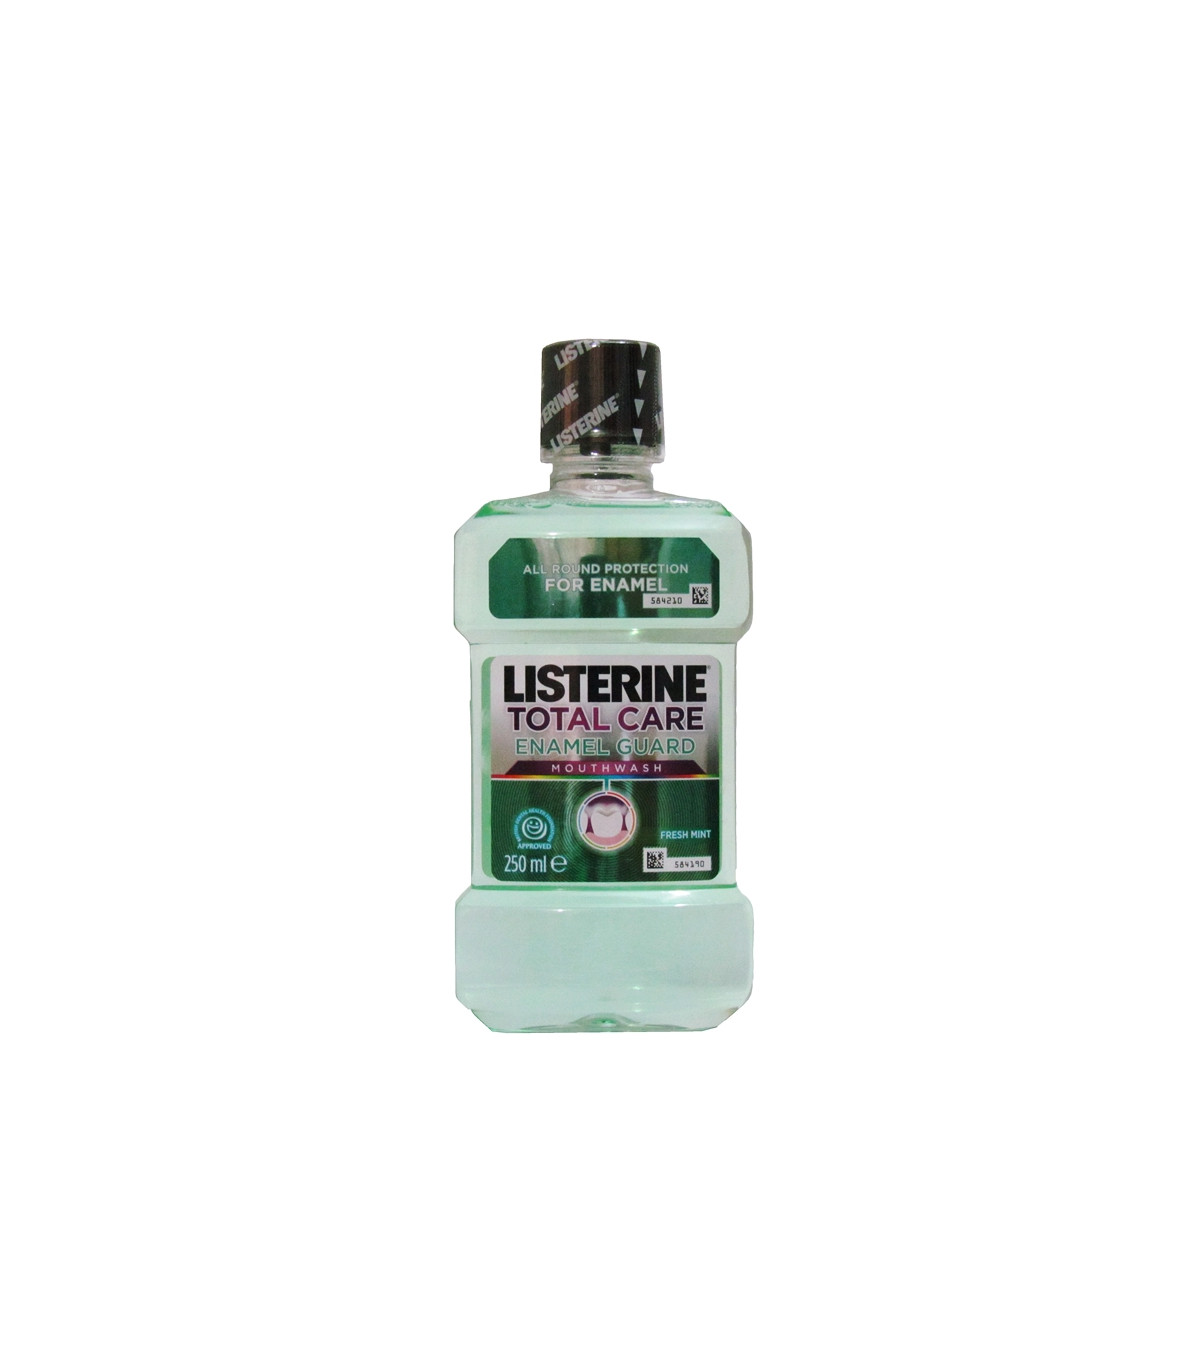 Listerine Total Care Enamel Guard Mouthwash 250ml